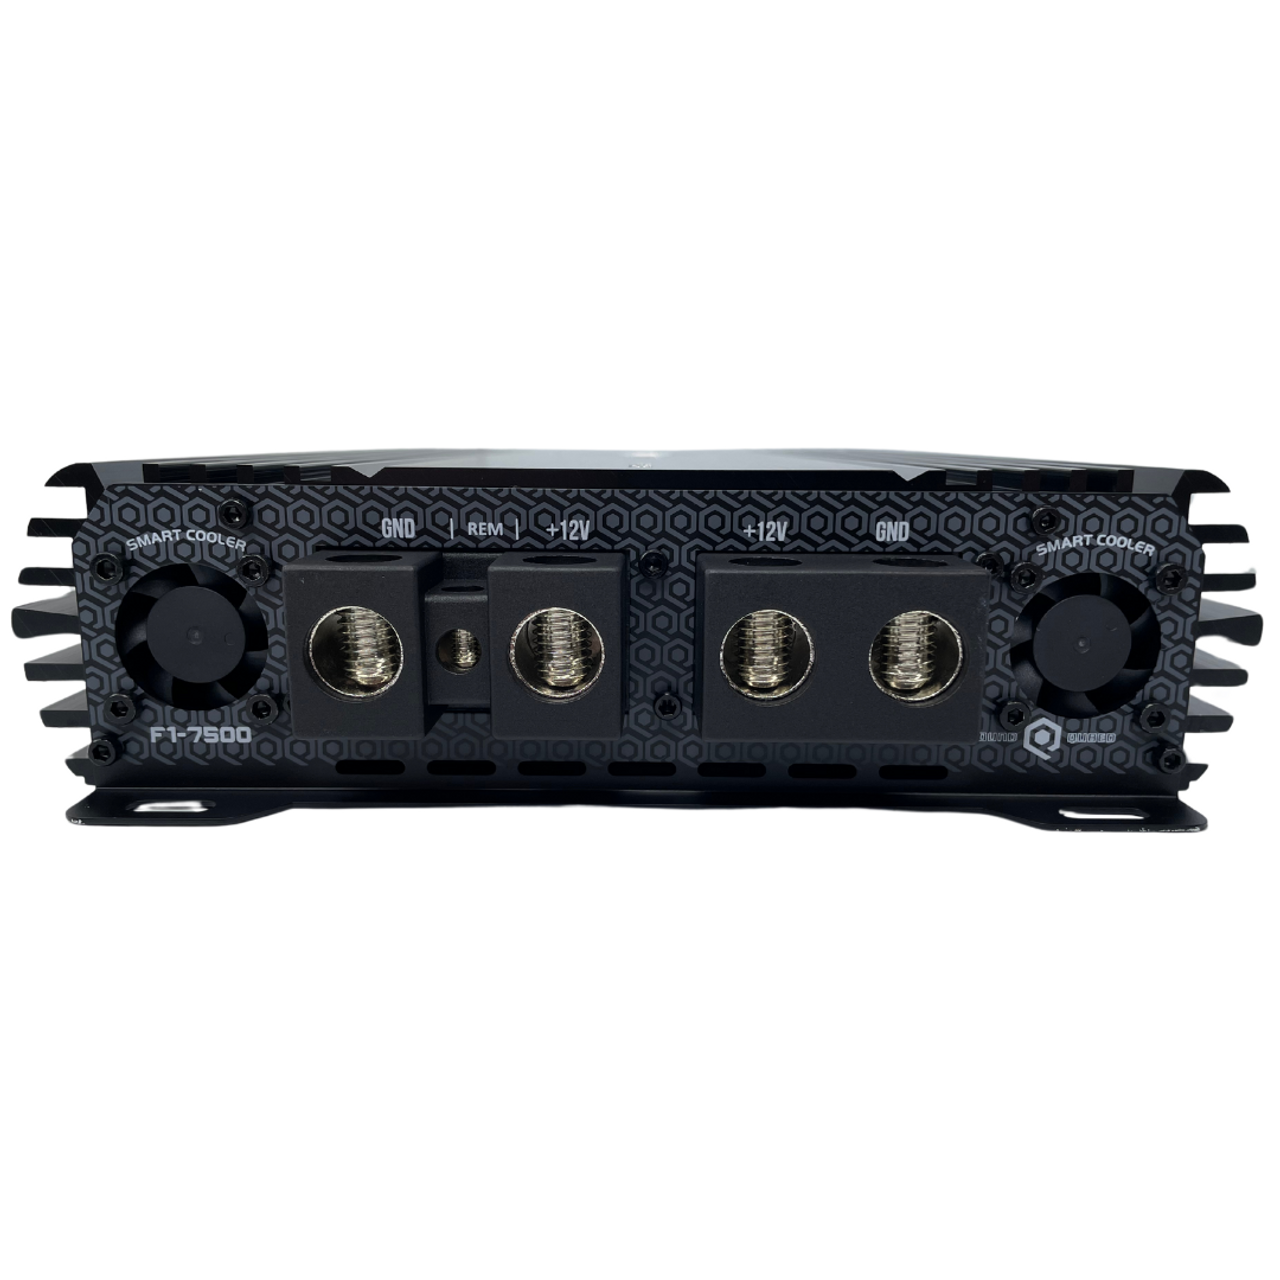 SOUNDQUBED F1-7500 Full Bridge 7500 Watts Mono Block Amplifier